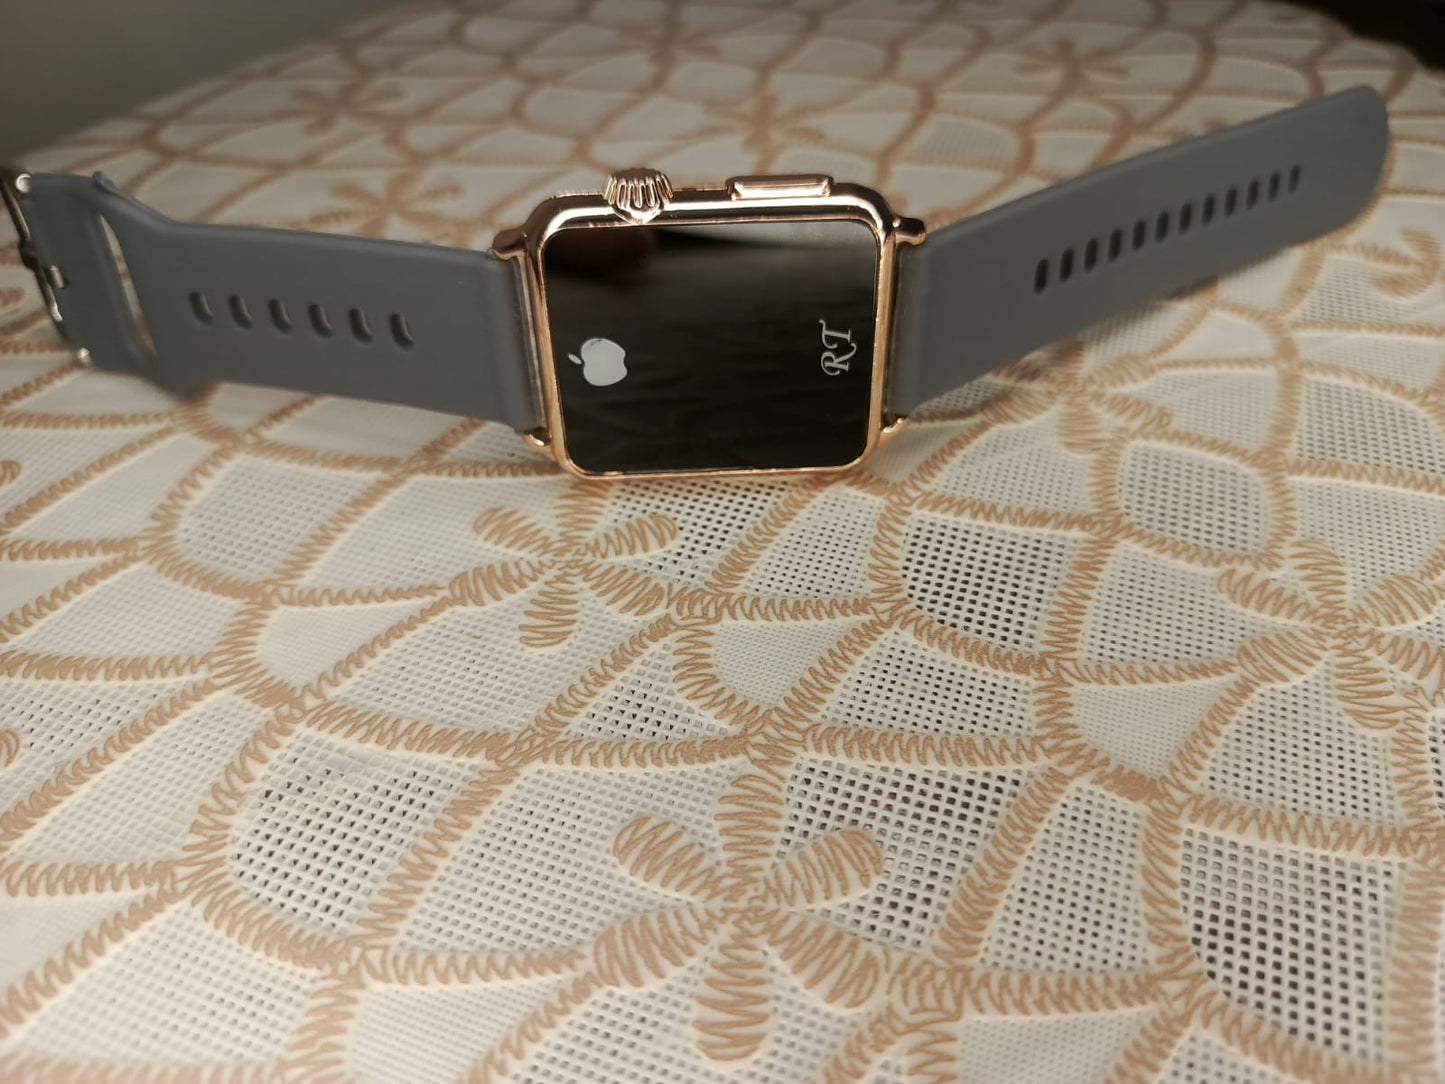 Apple design Led Smart Touch Screen Watch Waterproof